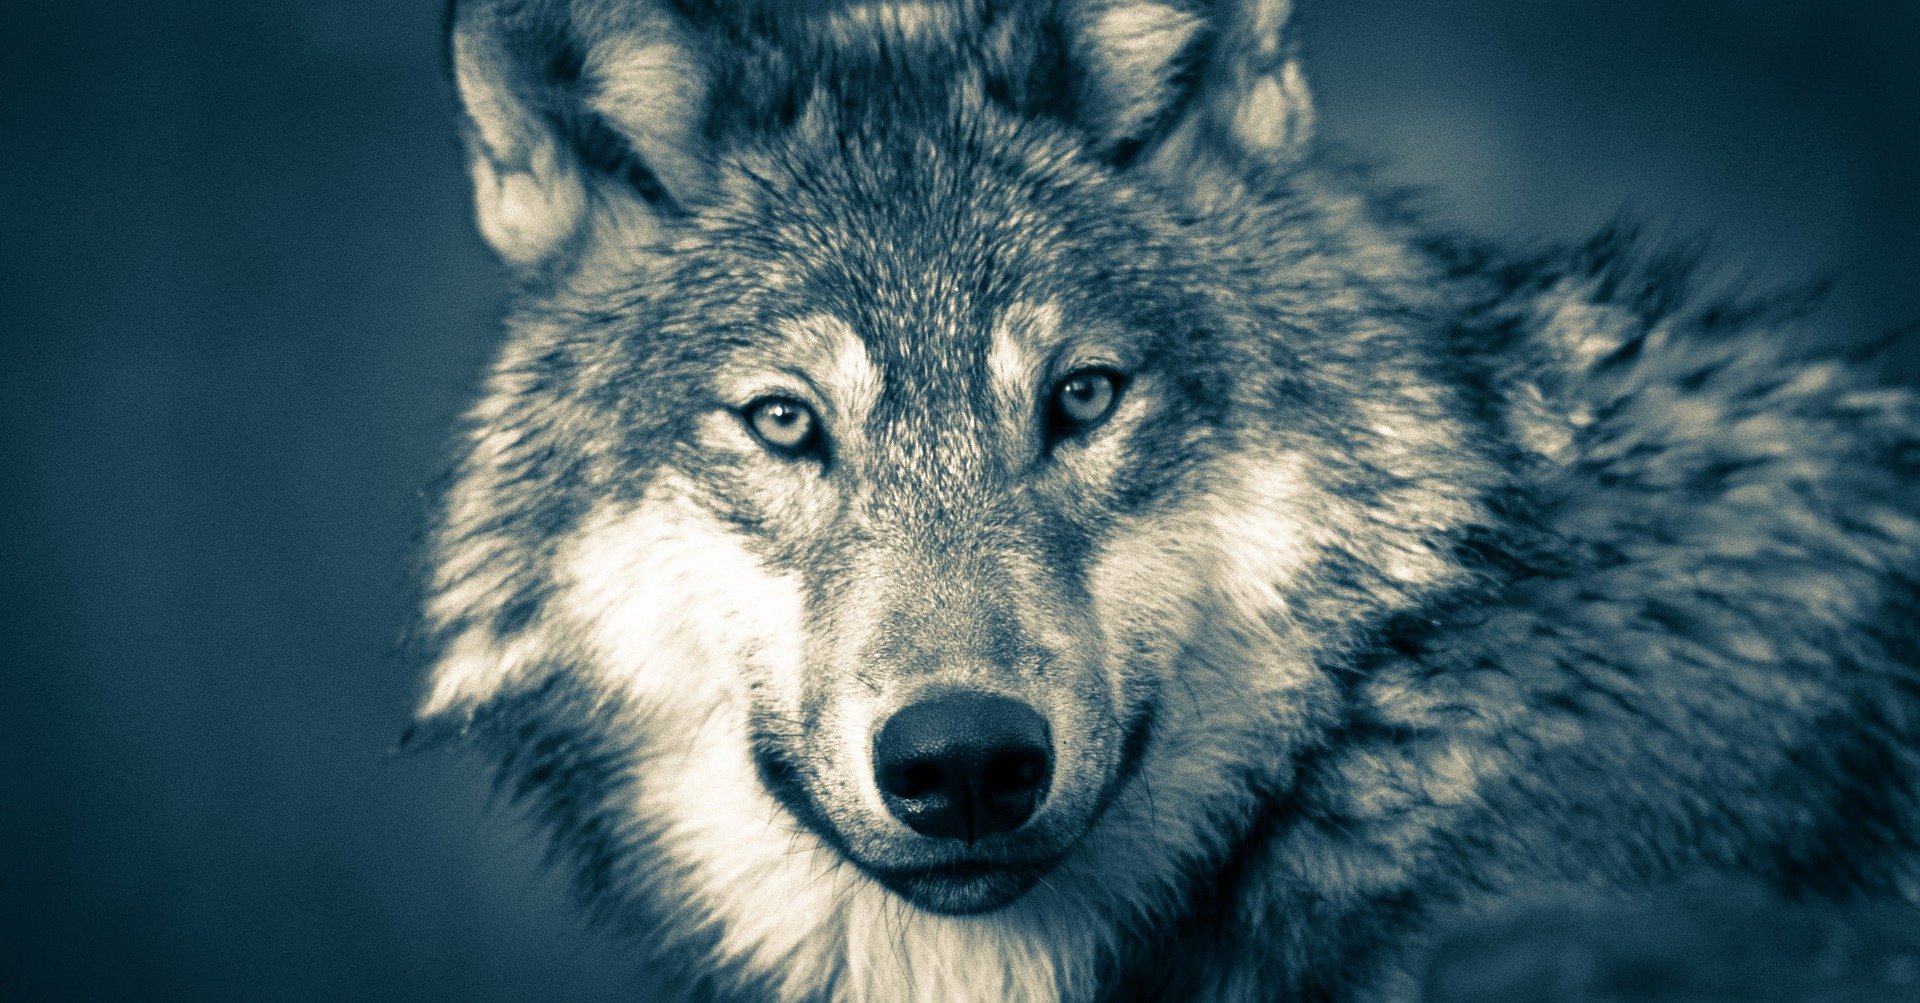 wolf hunt